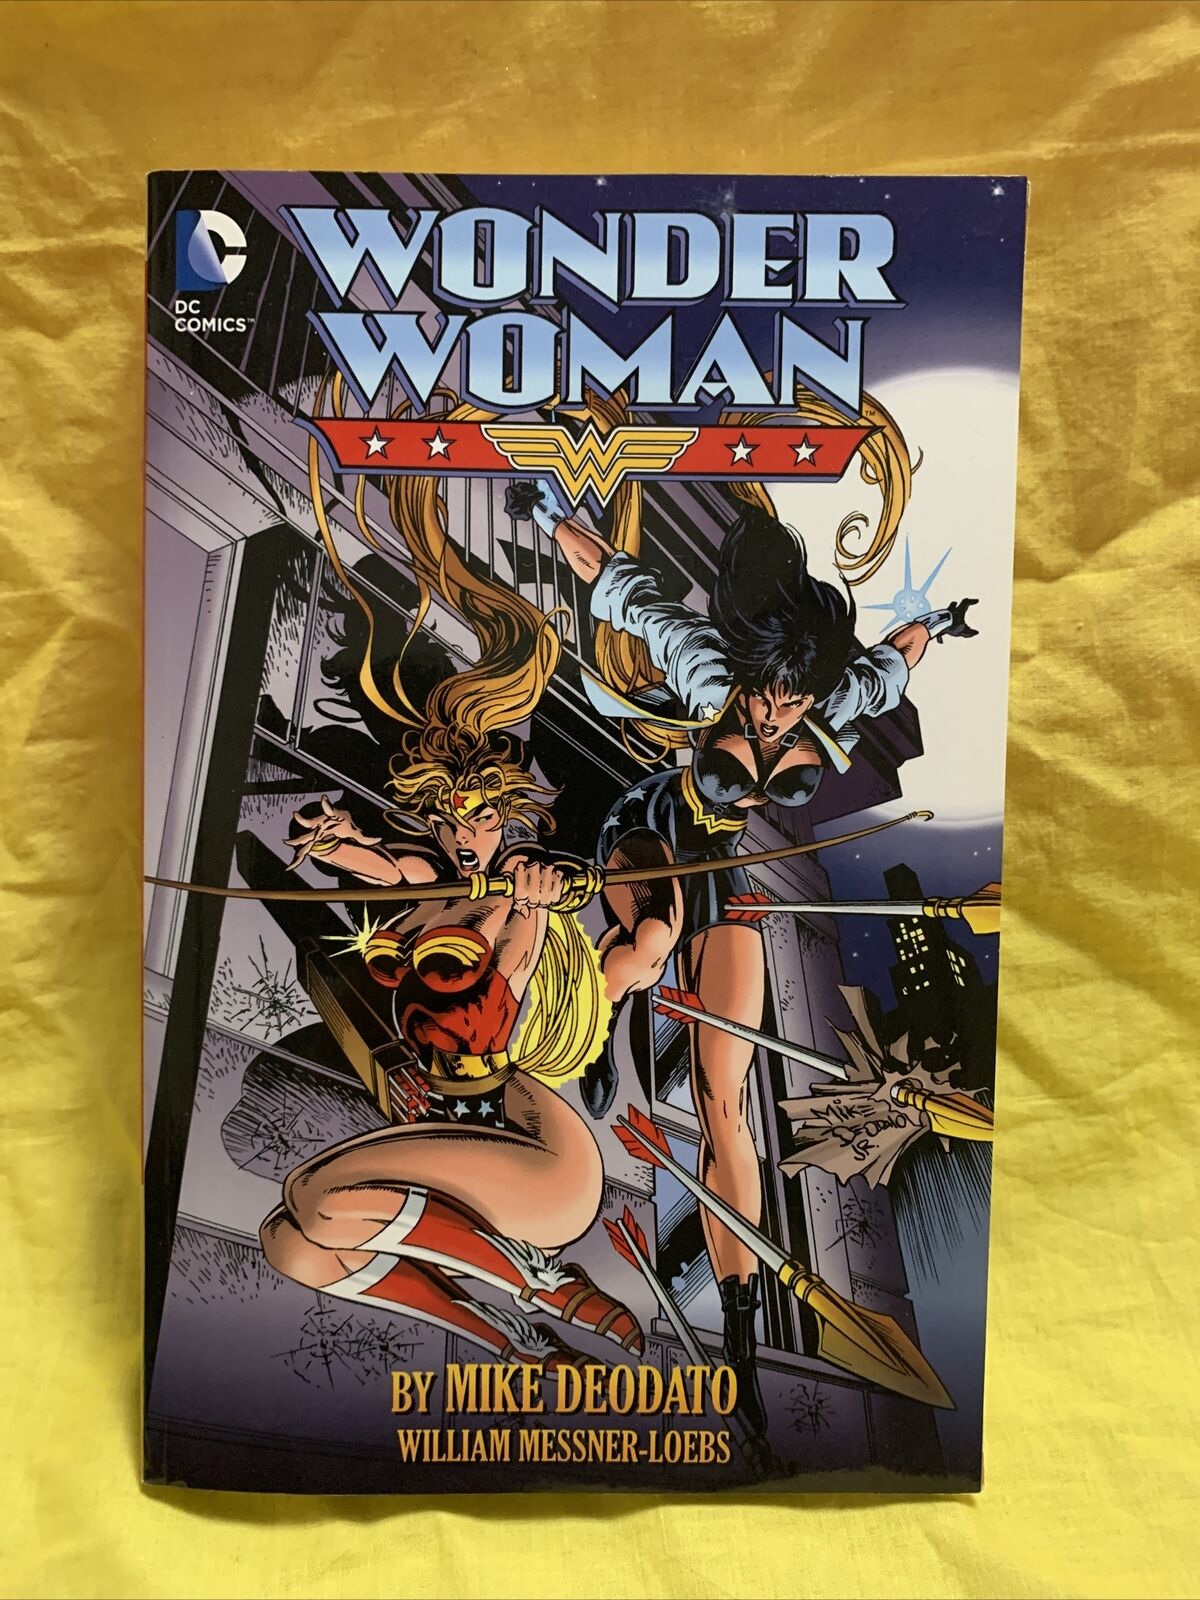 Wonder Woman by Mike Deodato (DC Comics, July 2016)